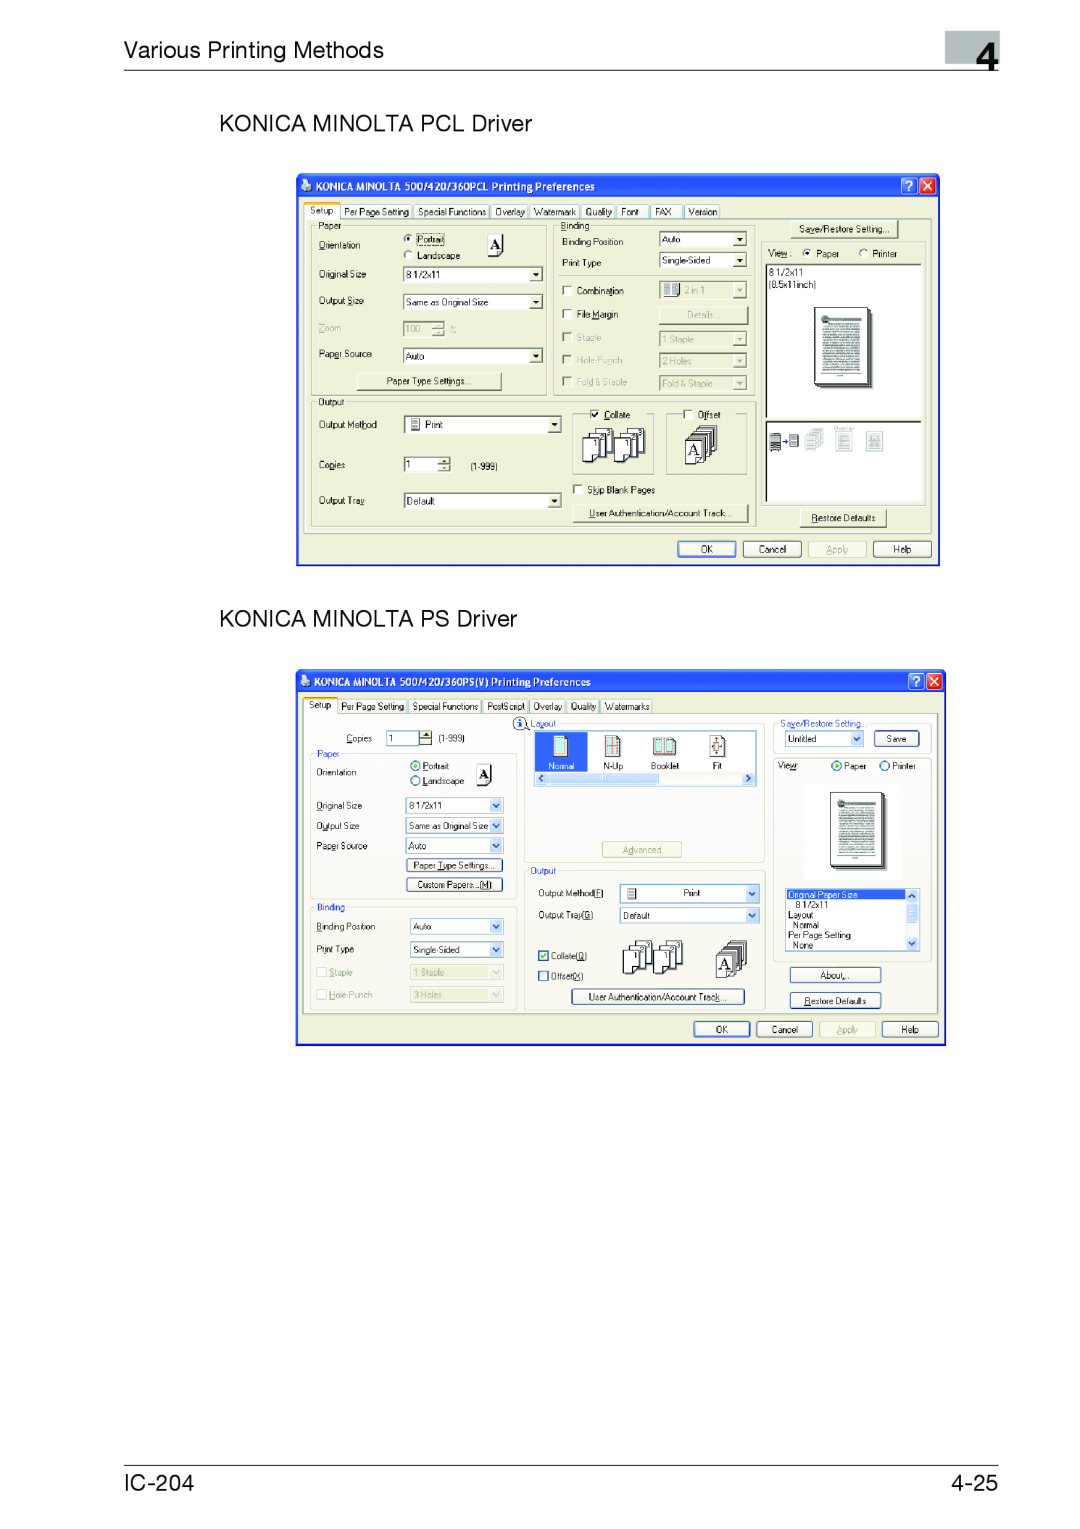 Konica Minolta IC-204 manual Various Printing Methods, KONICA MINOLTA PCL Driver, KONICA MINOLTA PS Driver, 4-25 